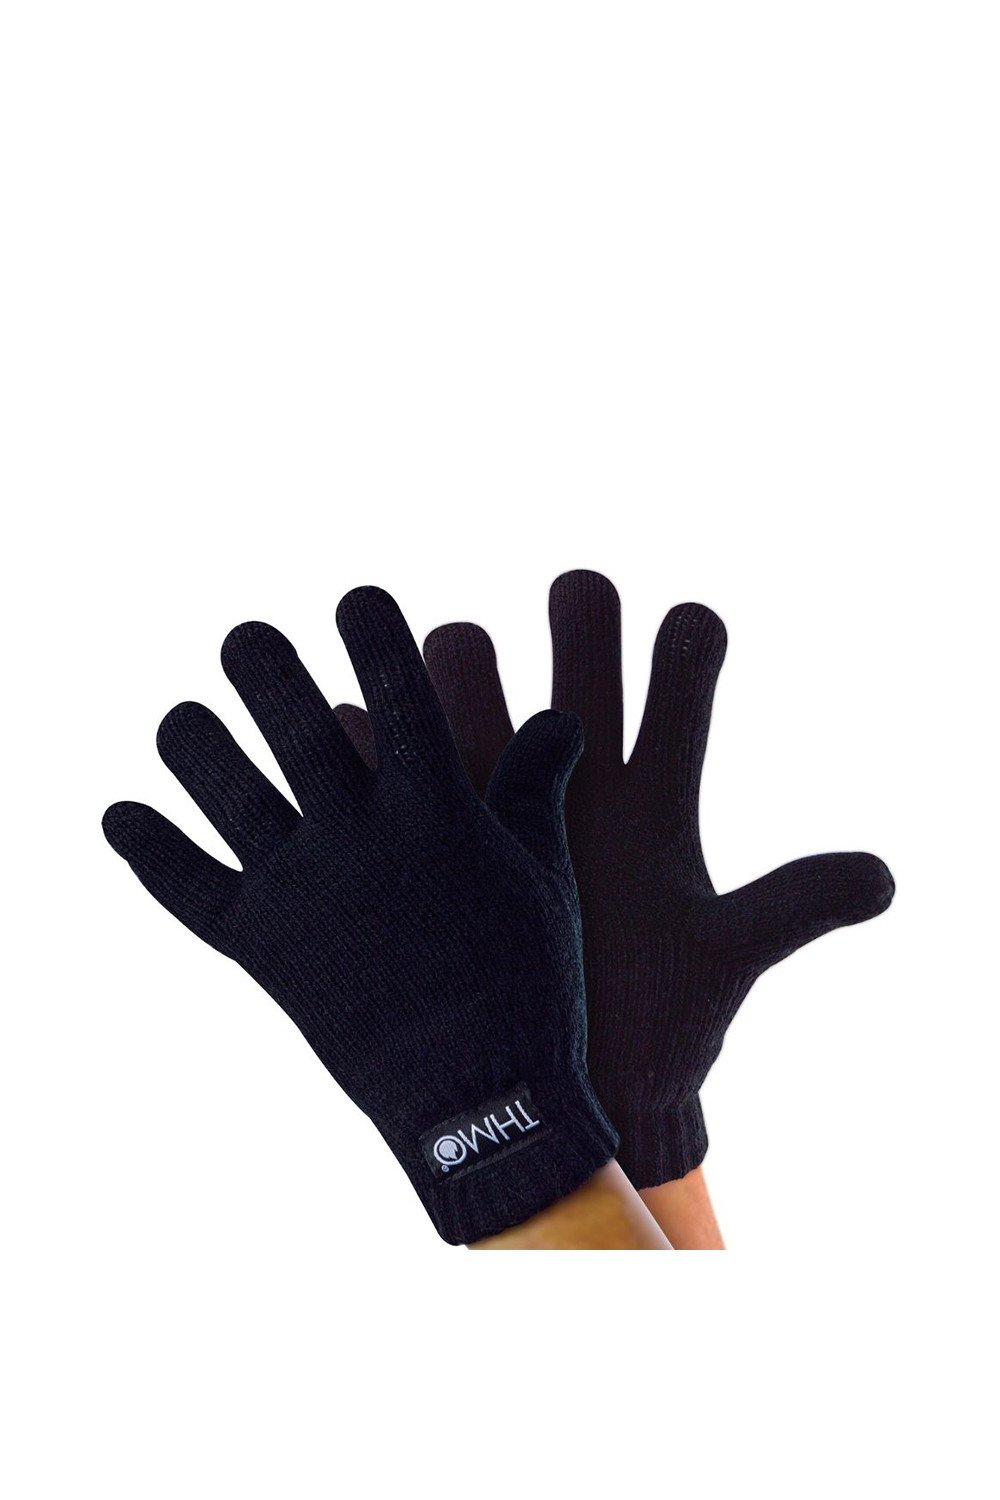 Knitted Thermal Full Finger Thinsulate Gloves for Winter